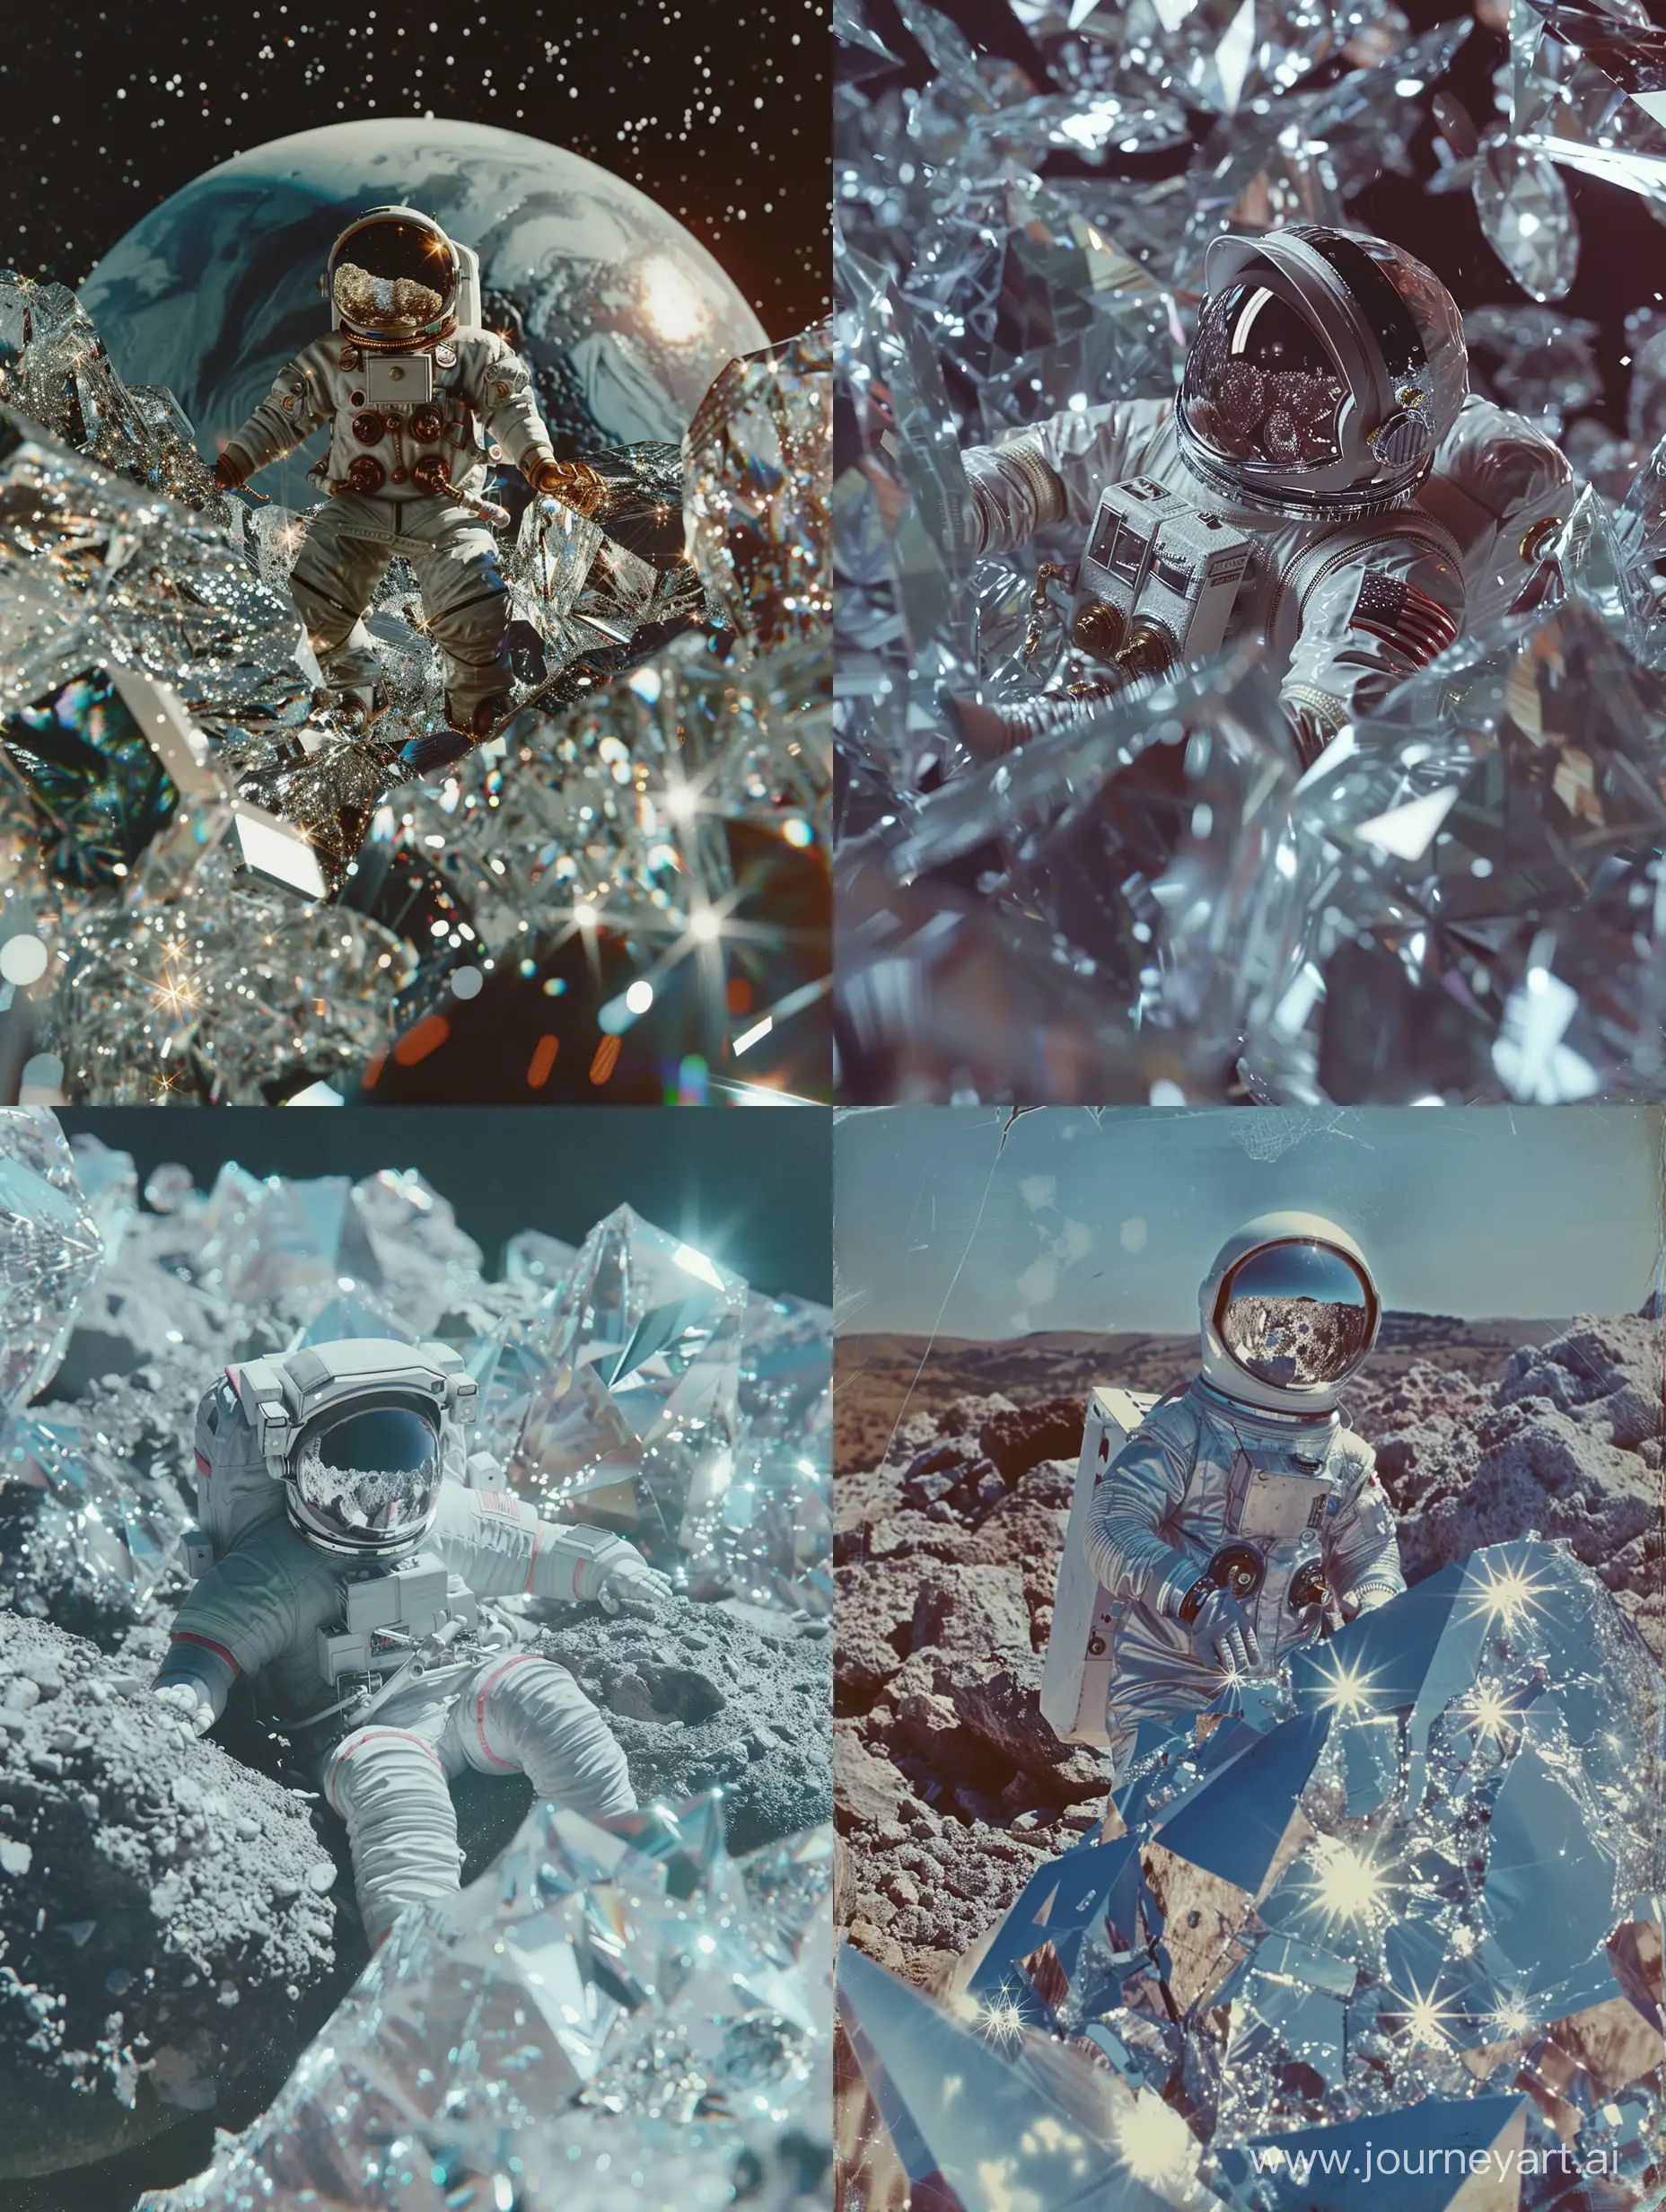 Hyperrealistic-SciFi-Astronaut-on-Diamond-Planet-1960s-Film-Photograph